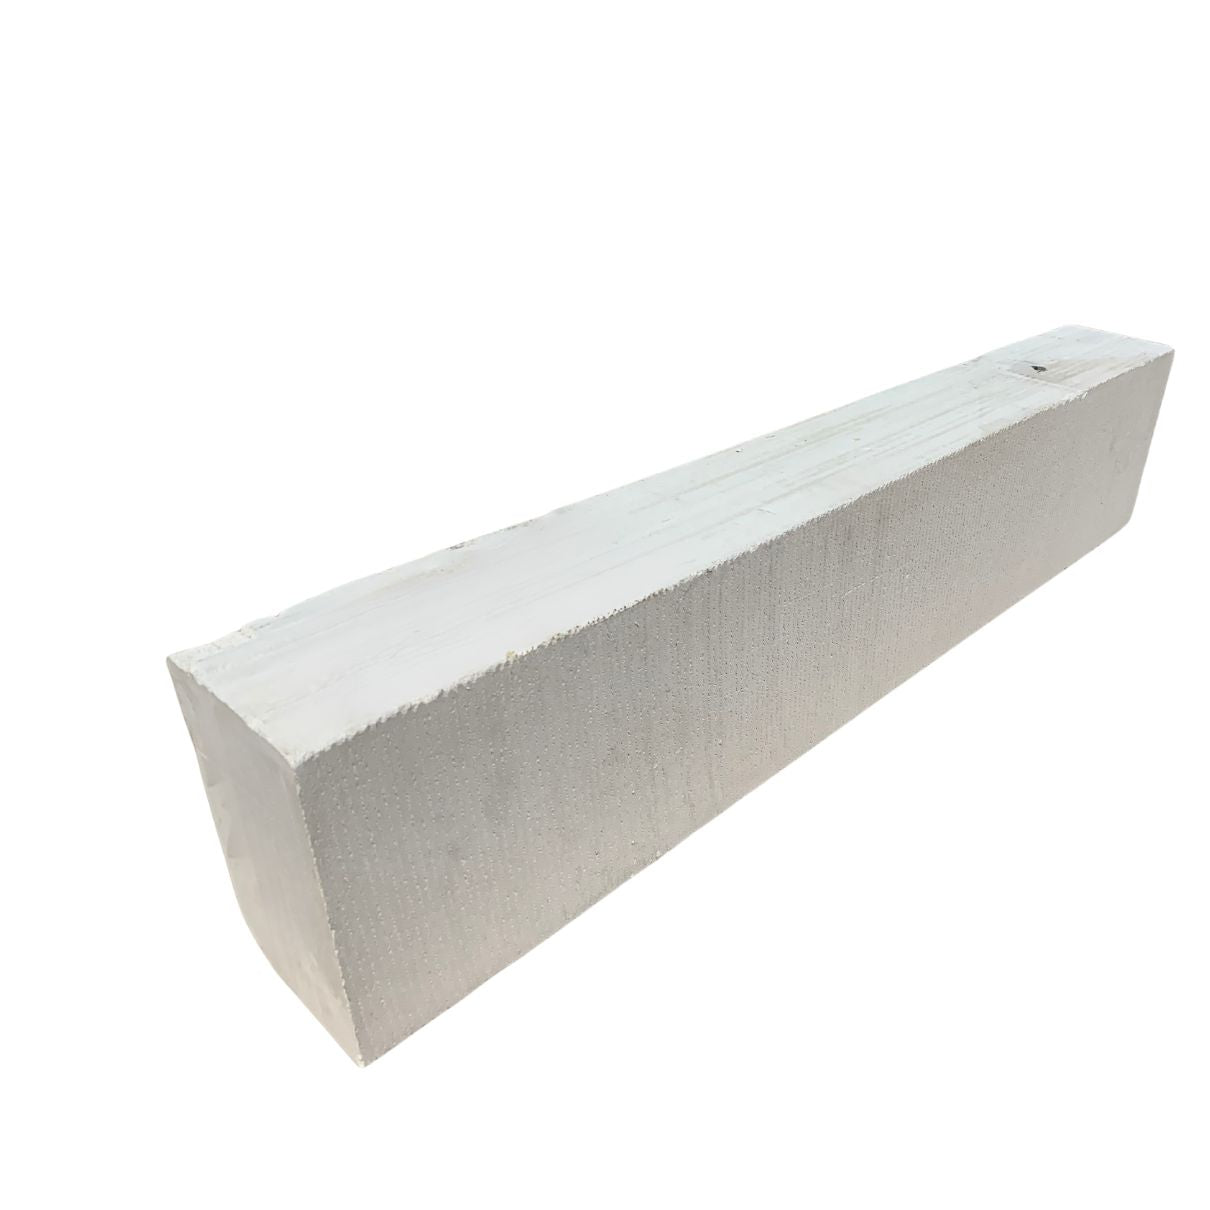 Aerated concrete Lintel 1500x250x200mm